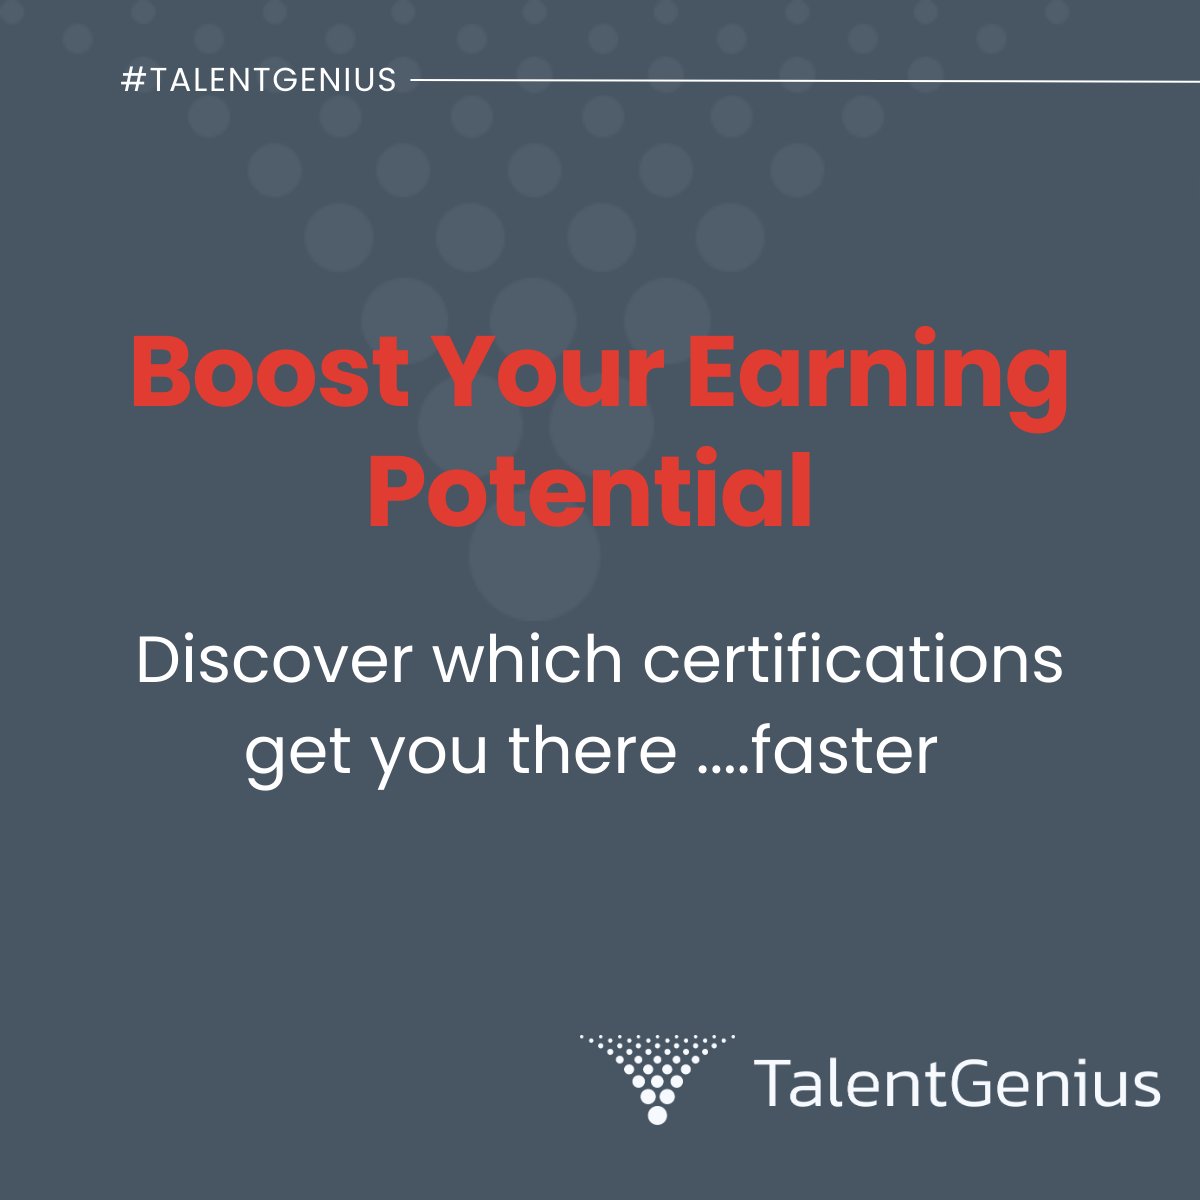 Download today talentgenius.io/coach?utm_sour… #TalentGeniusCoach #TechJobSearch #Hiring #FutureWithAI